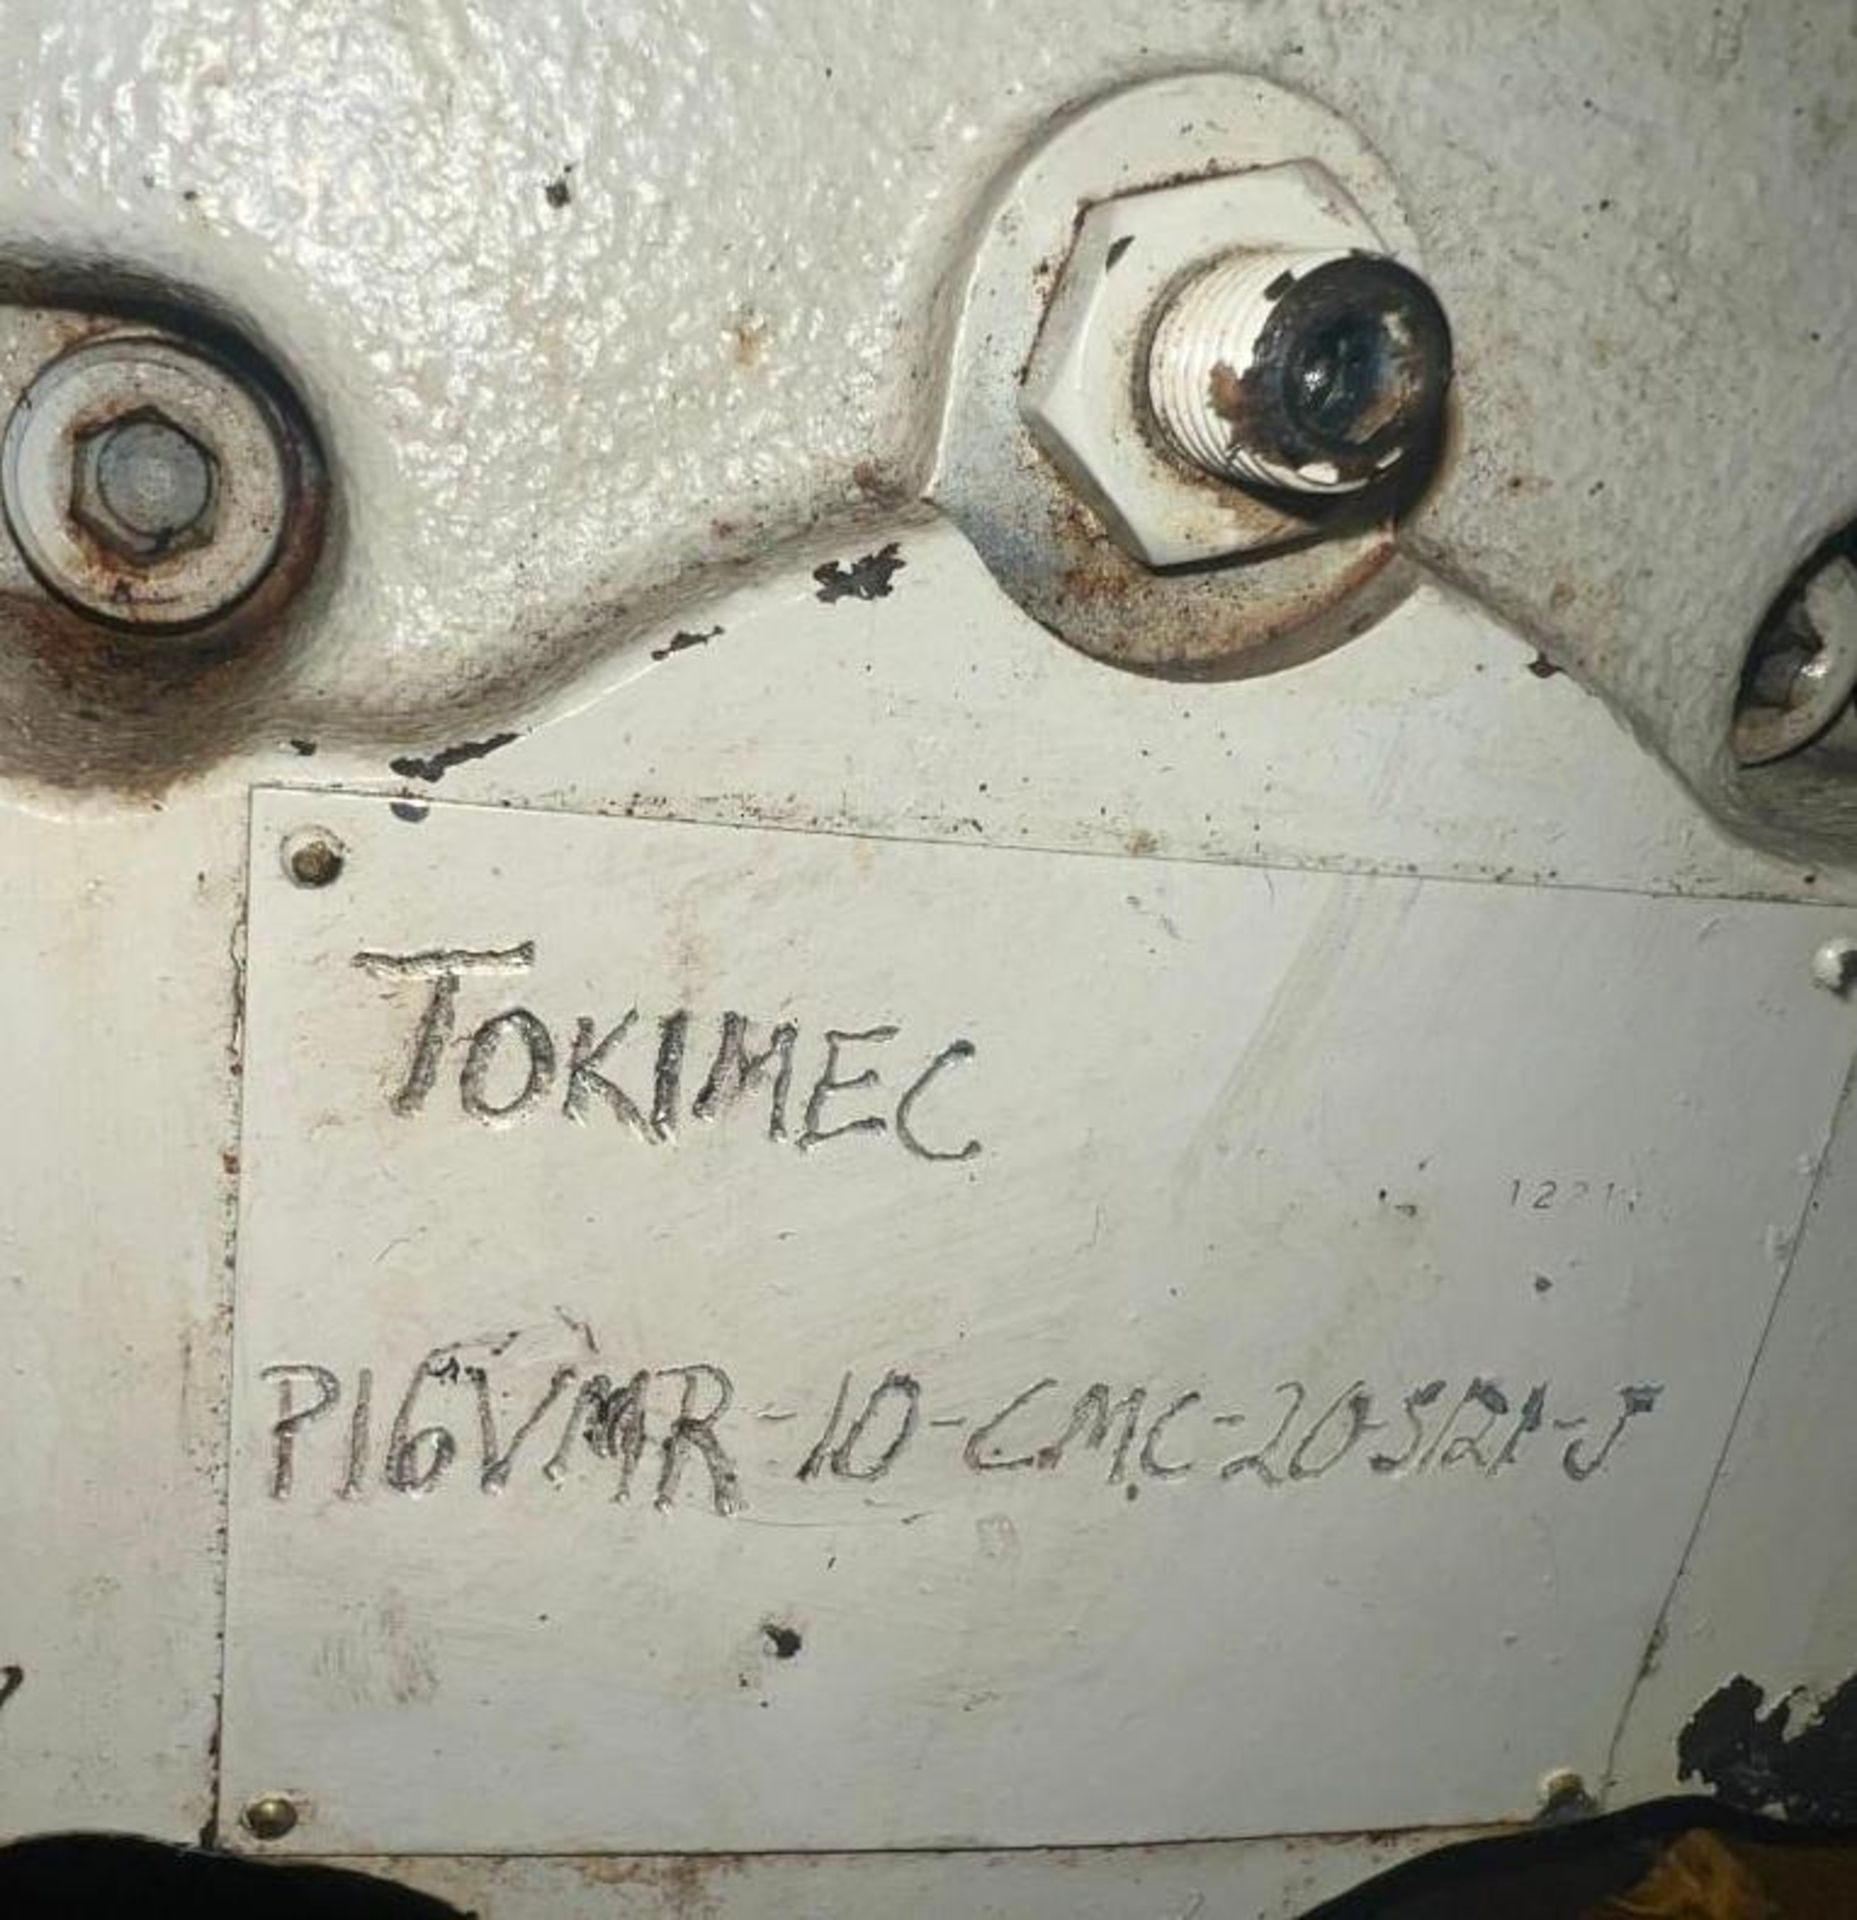 Tokimec #P16VMR-10-CMC-20-S121-J Hydraulic Pump - Image 3 of 3